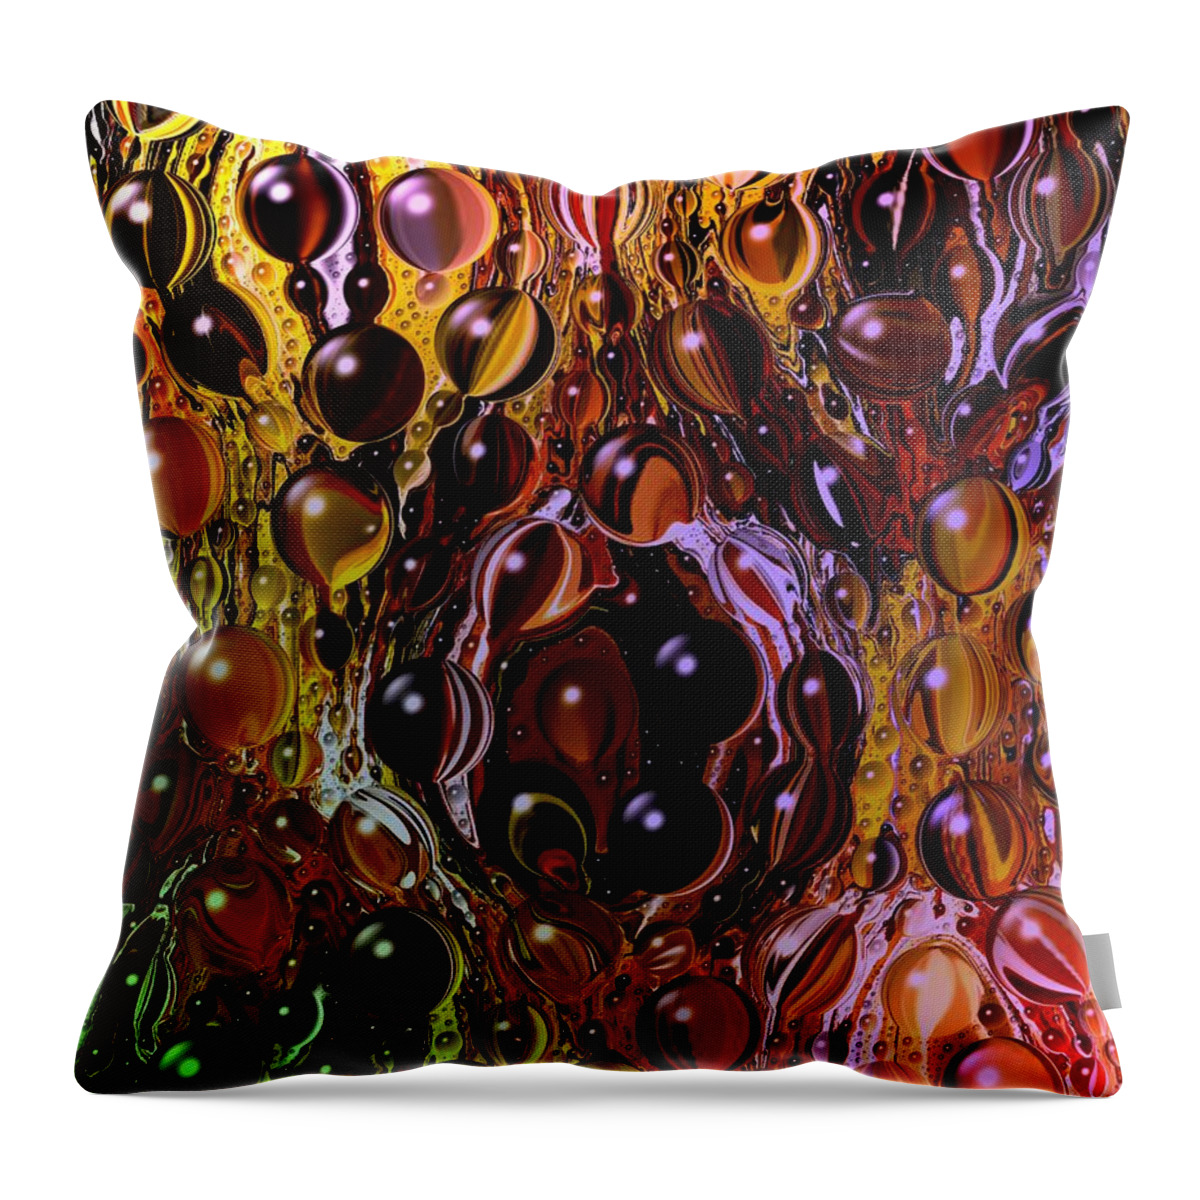 Digital Art Throw Pillow featuring the digital art Abstract #200 by Belinda Cox